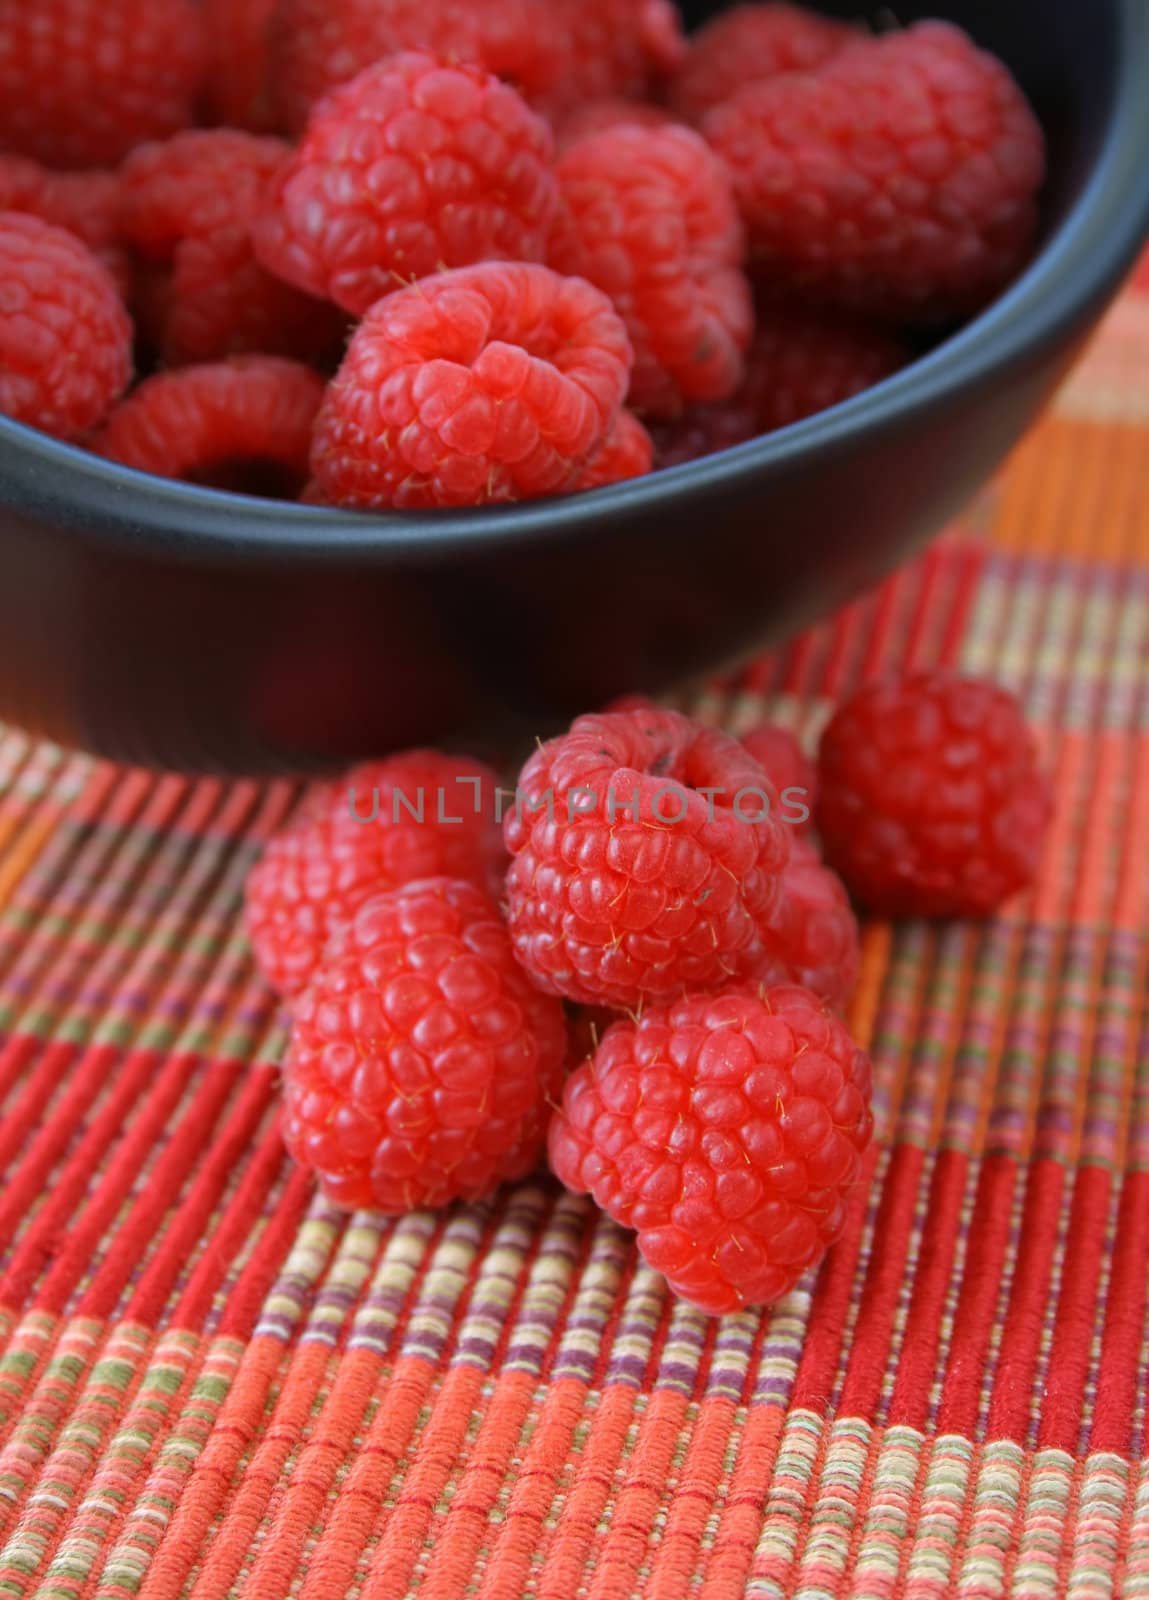 Fresh Raspberries by thephotoguy